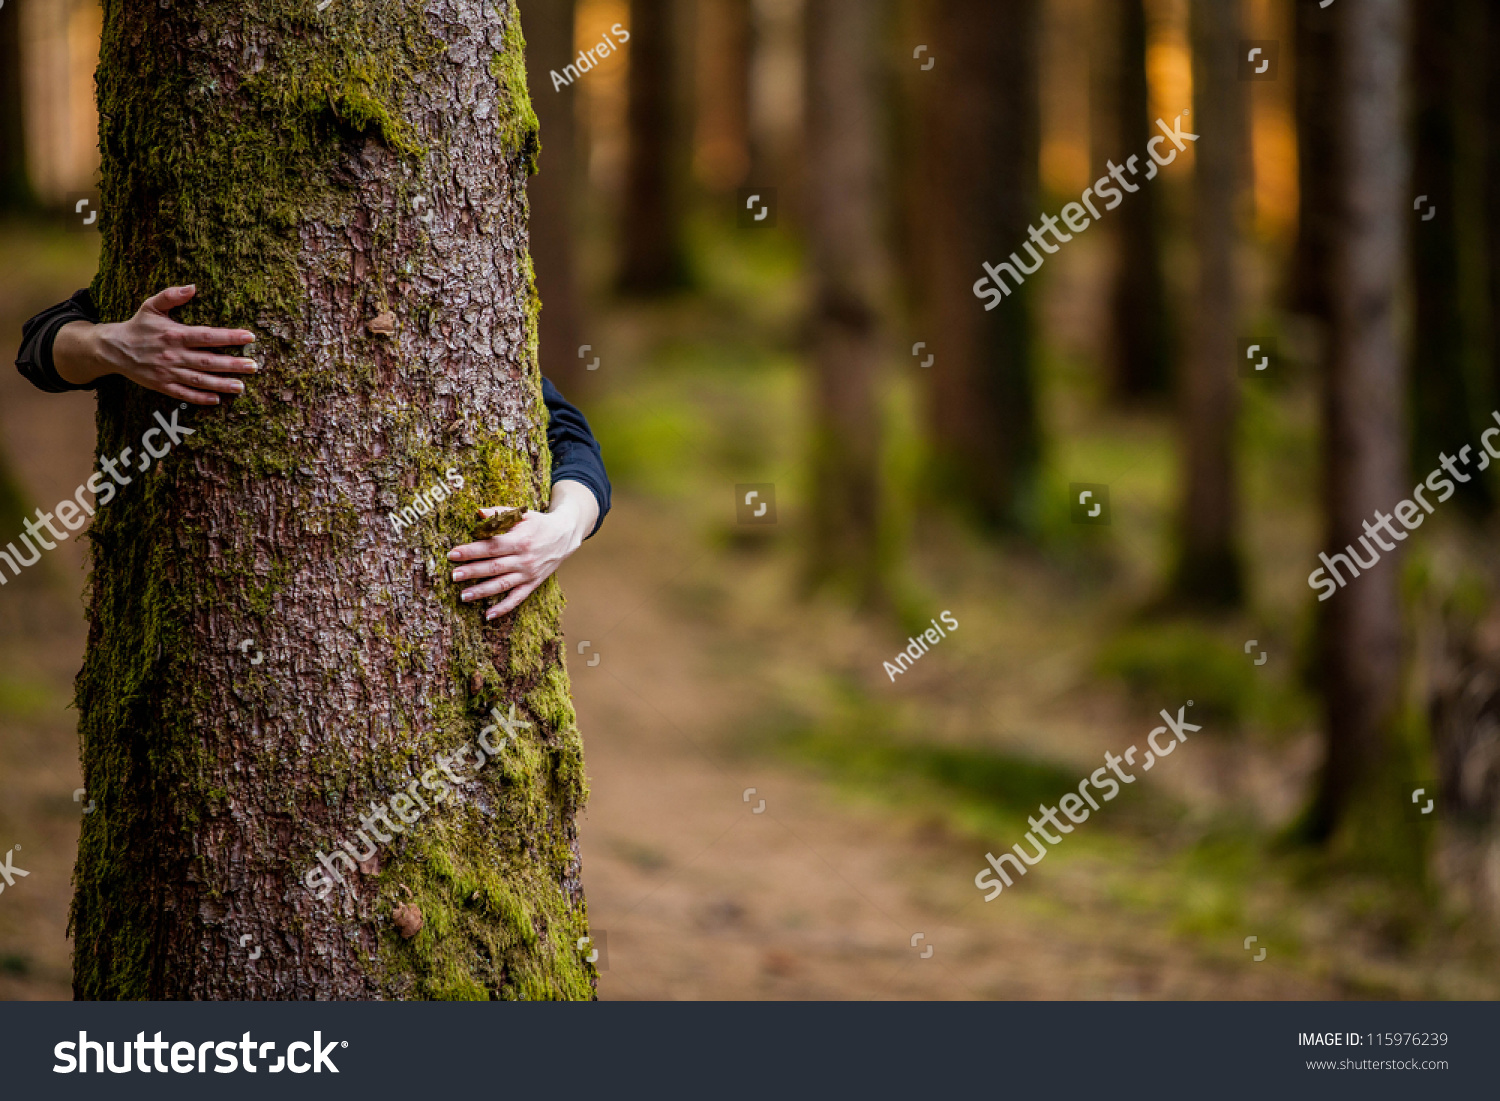 hugging a tree #115976239